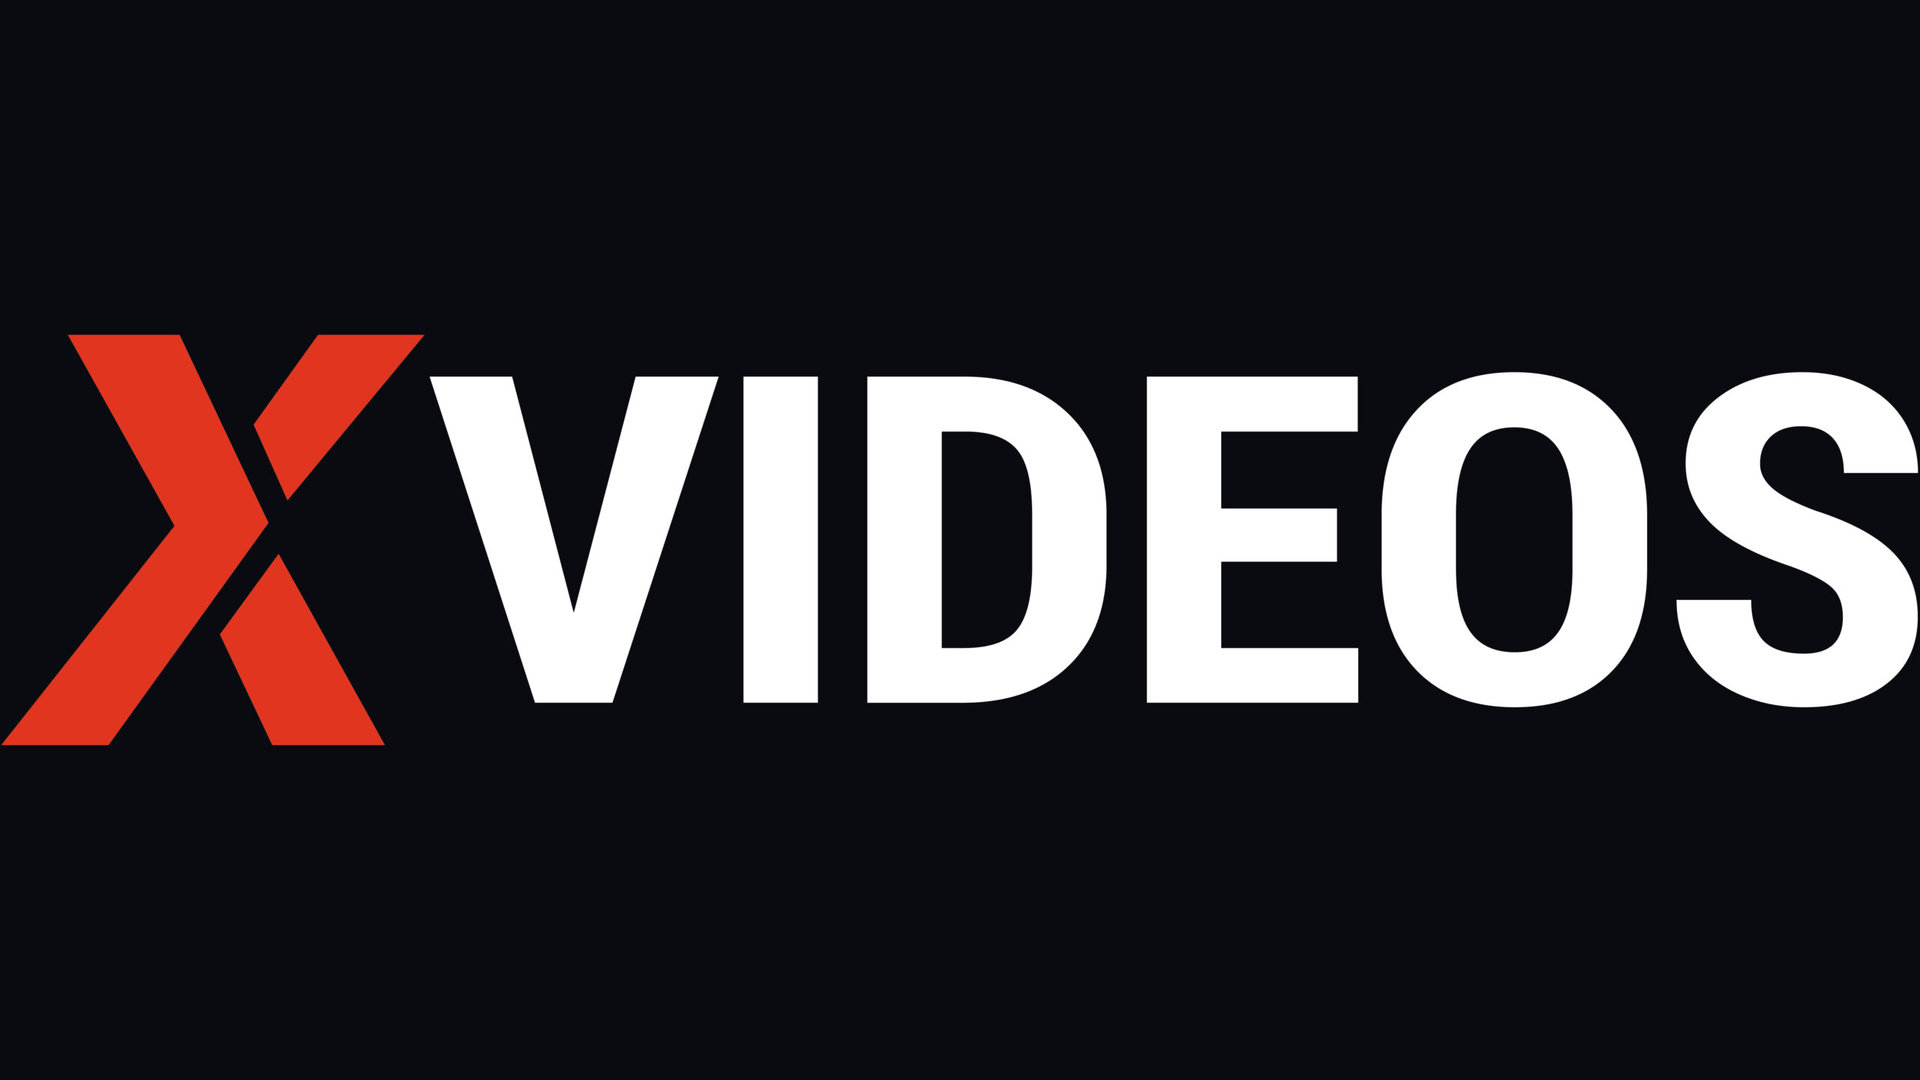 Xvideos logo